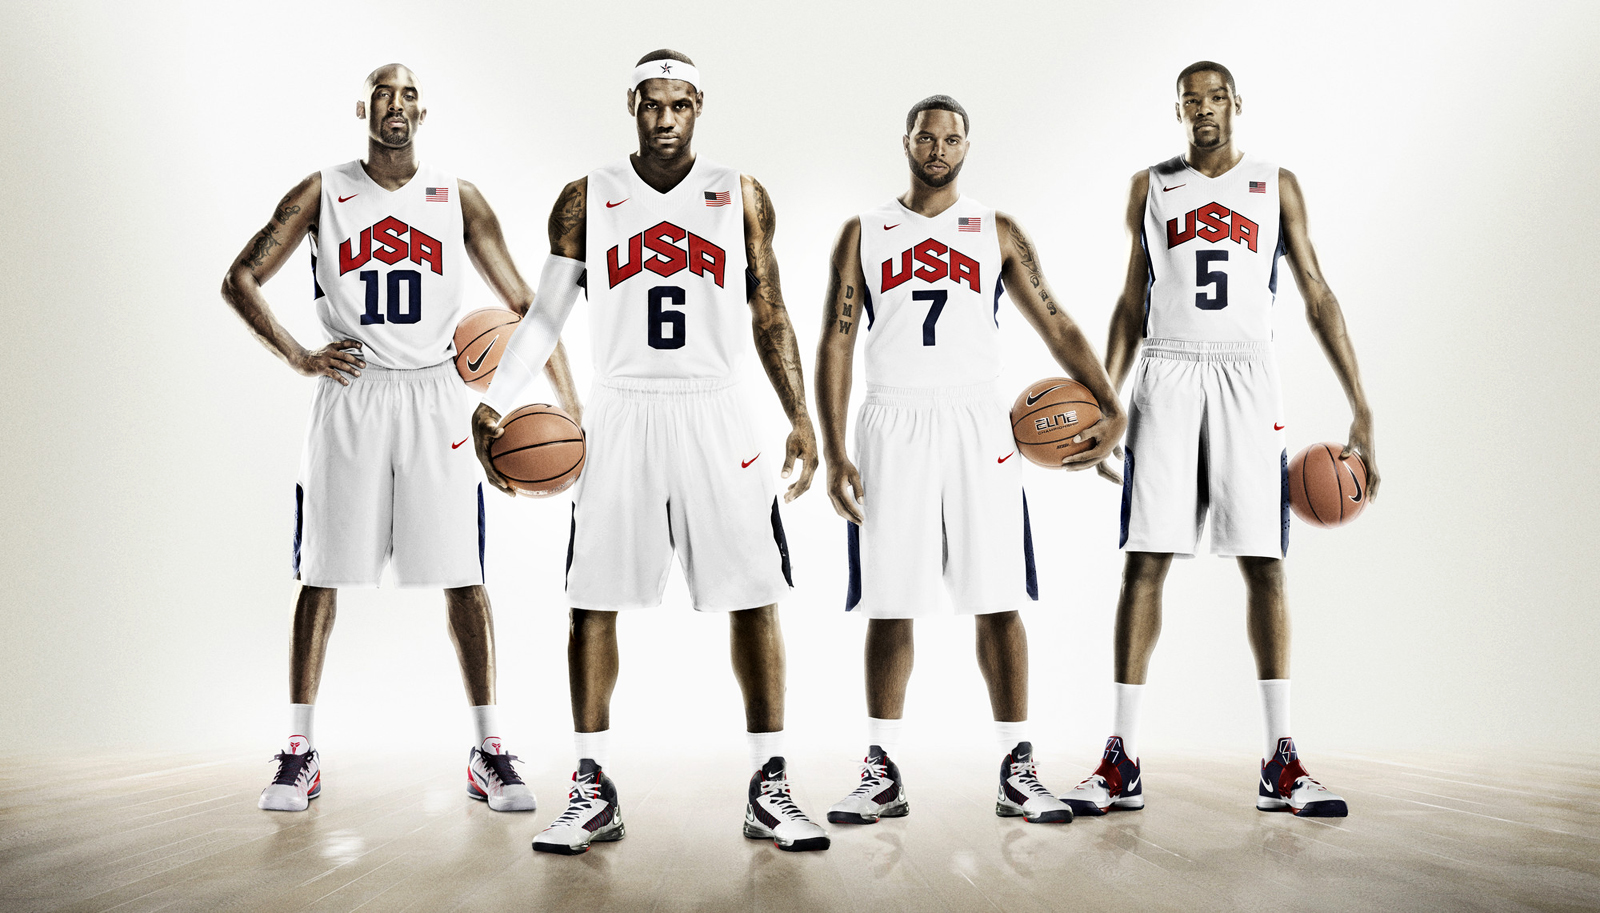 https://blogger.googleusercontent.com/img/b/R29vZ2xl/AVvXsEiFs9zRL8SudWg2hIRsN19oqSoNxzdN4lXp2XNpNKCcArsW6JJb5516siwK6QCUBNyh29aZrYxKavKzRVRICvmmC2nqOirdHBOj32oAbLOrASVw6WyIiMm9R_4Ws4VYzkBj2LbPU6Vt9K8/s1600/Usa_Basketball_Team_Olympics_2012_Nike_HD_Wallpaper-Vvallpaper.Net.jpg